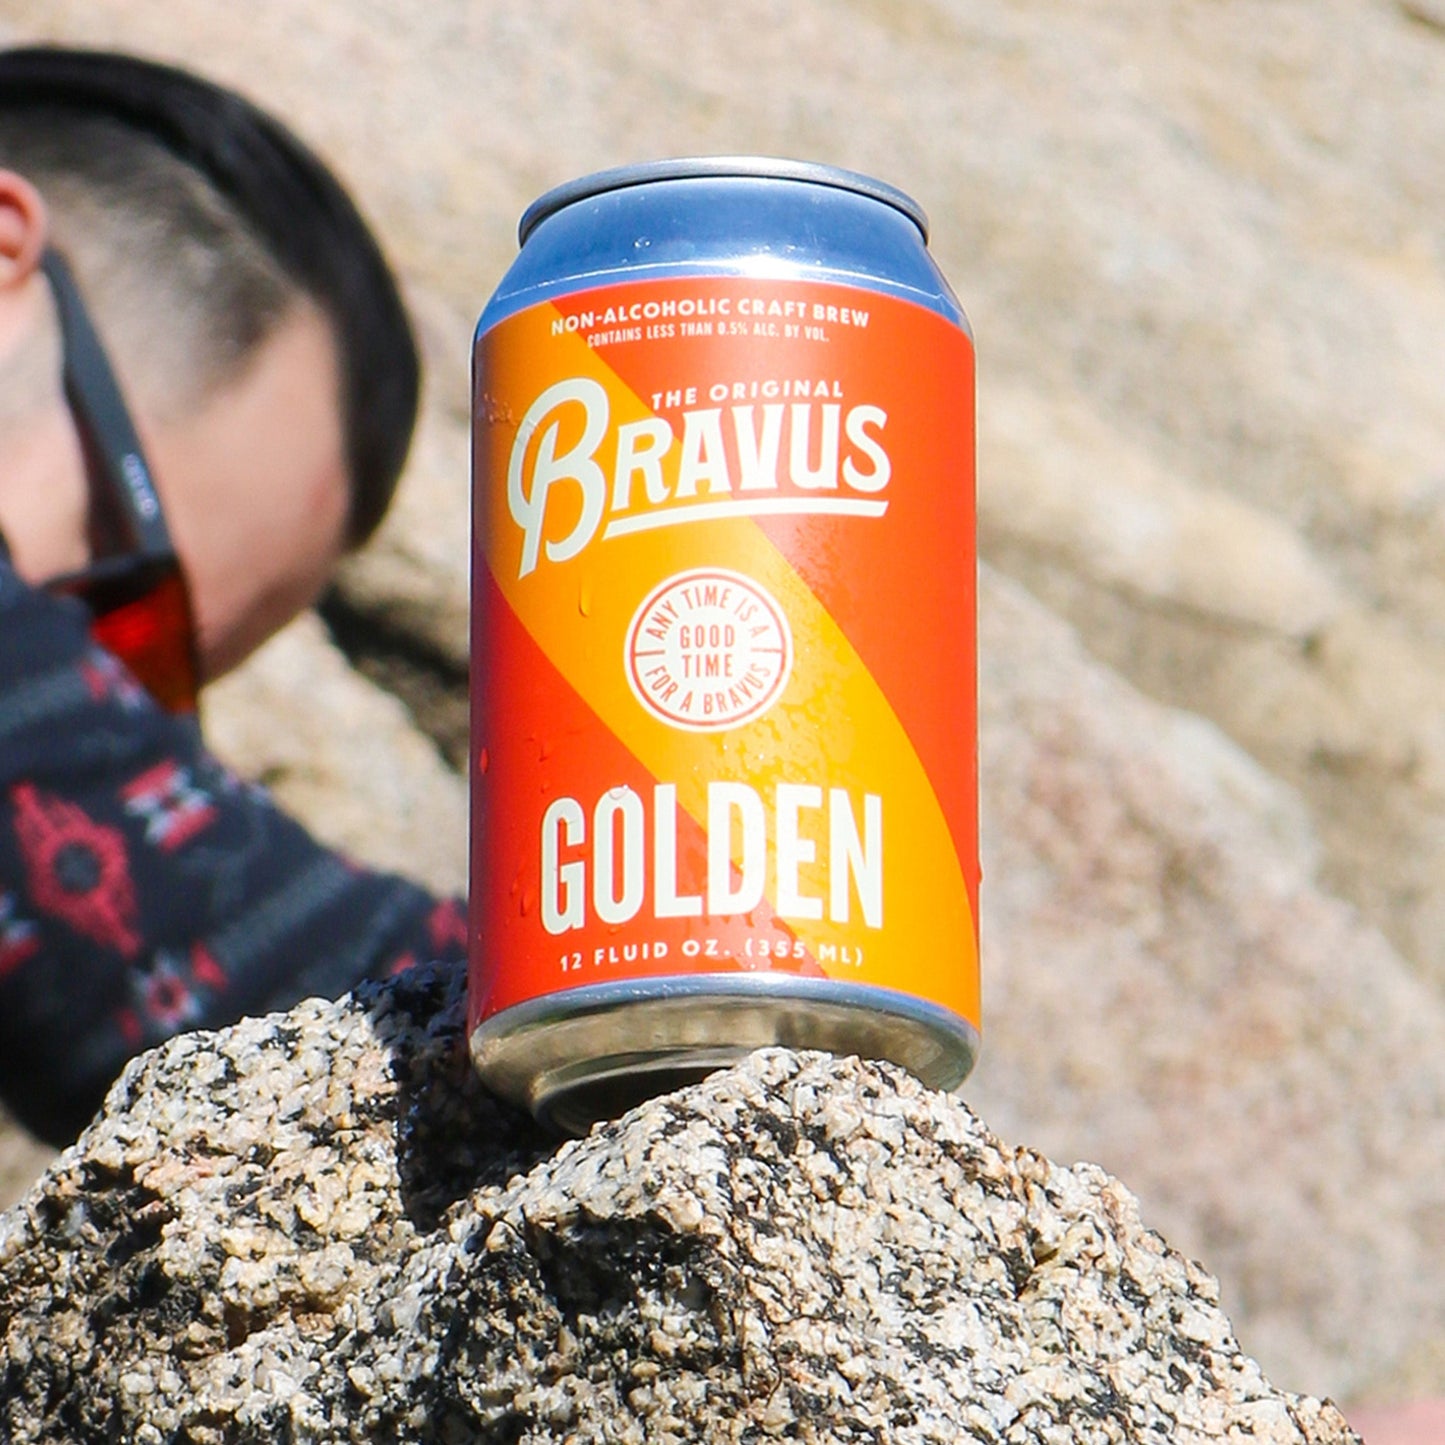 Golden Light by Bravus Brewing Company